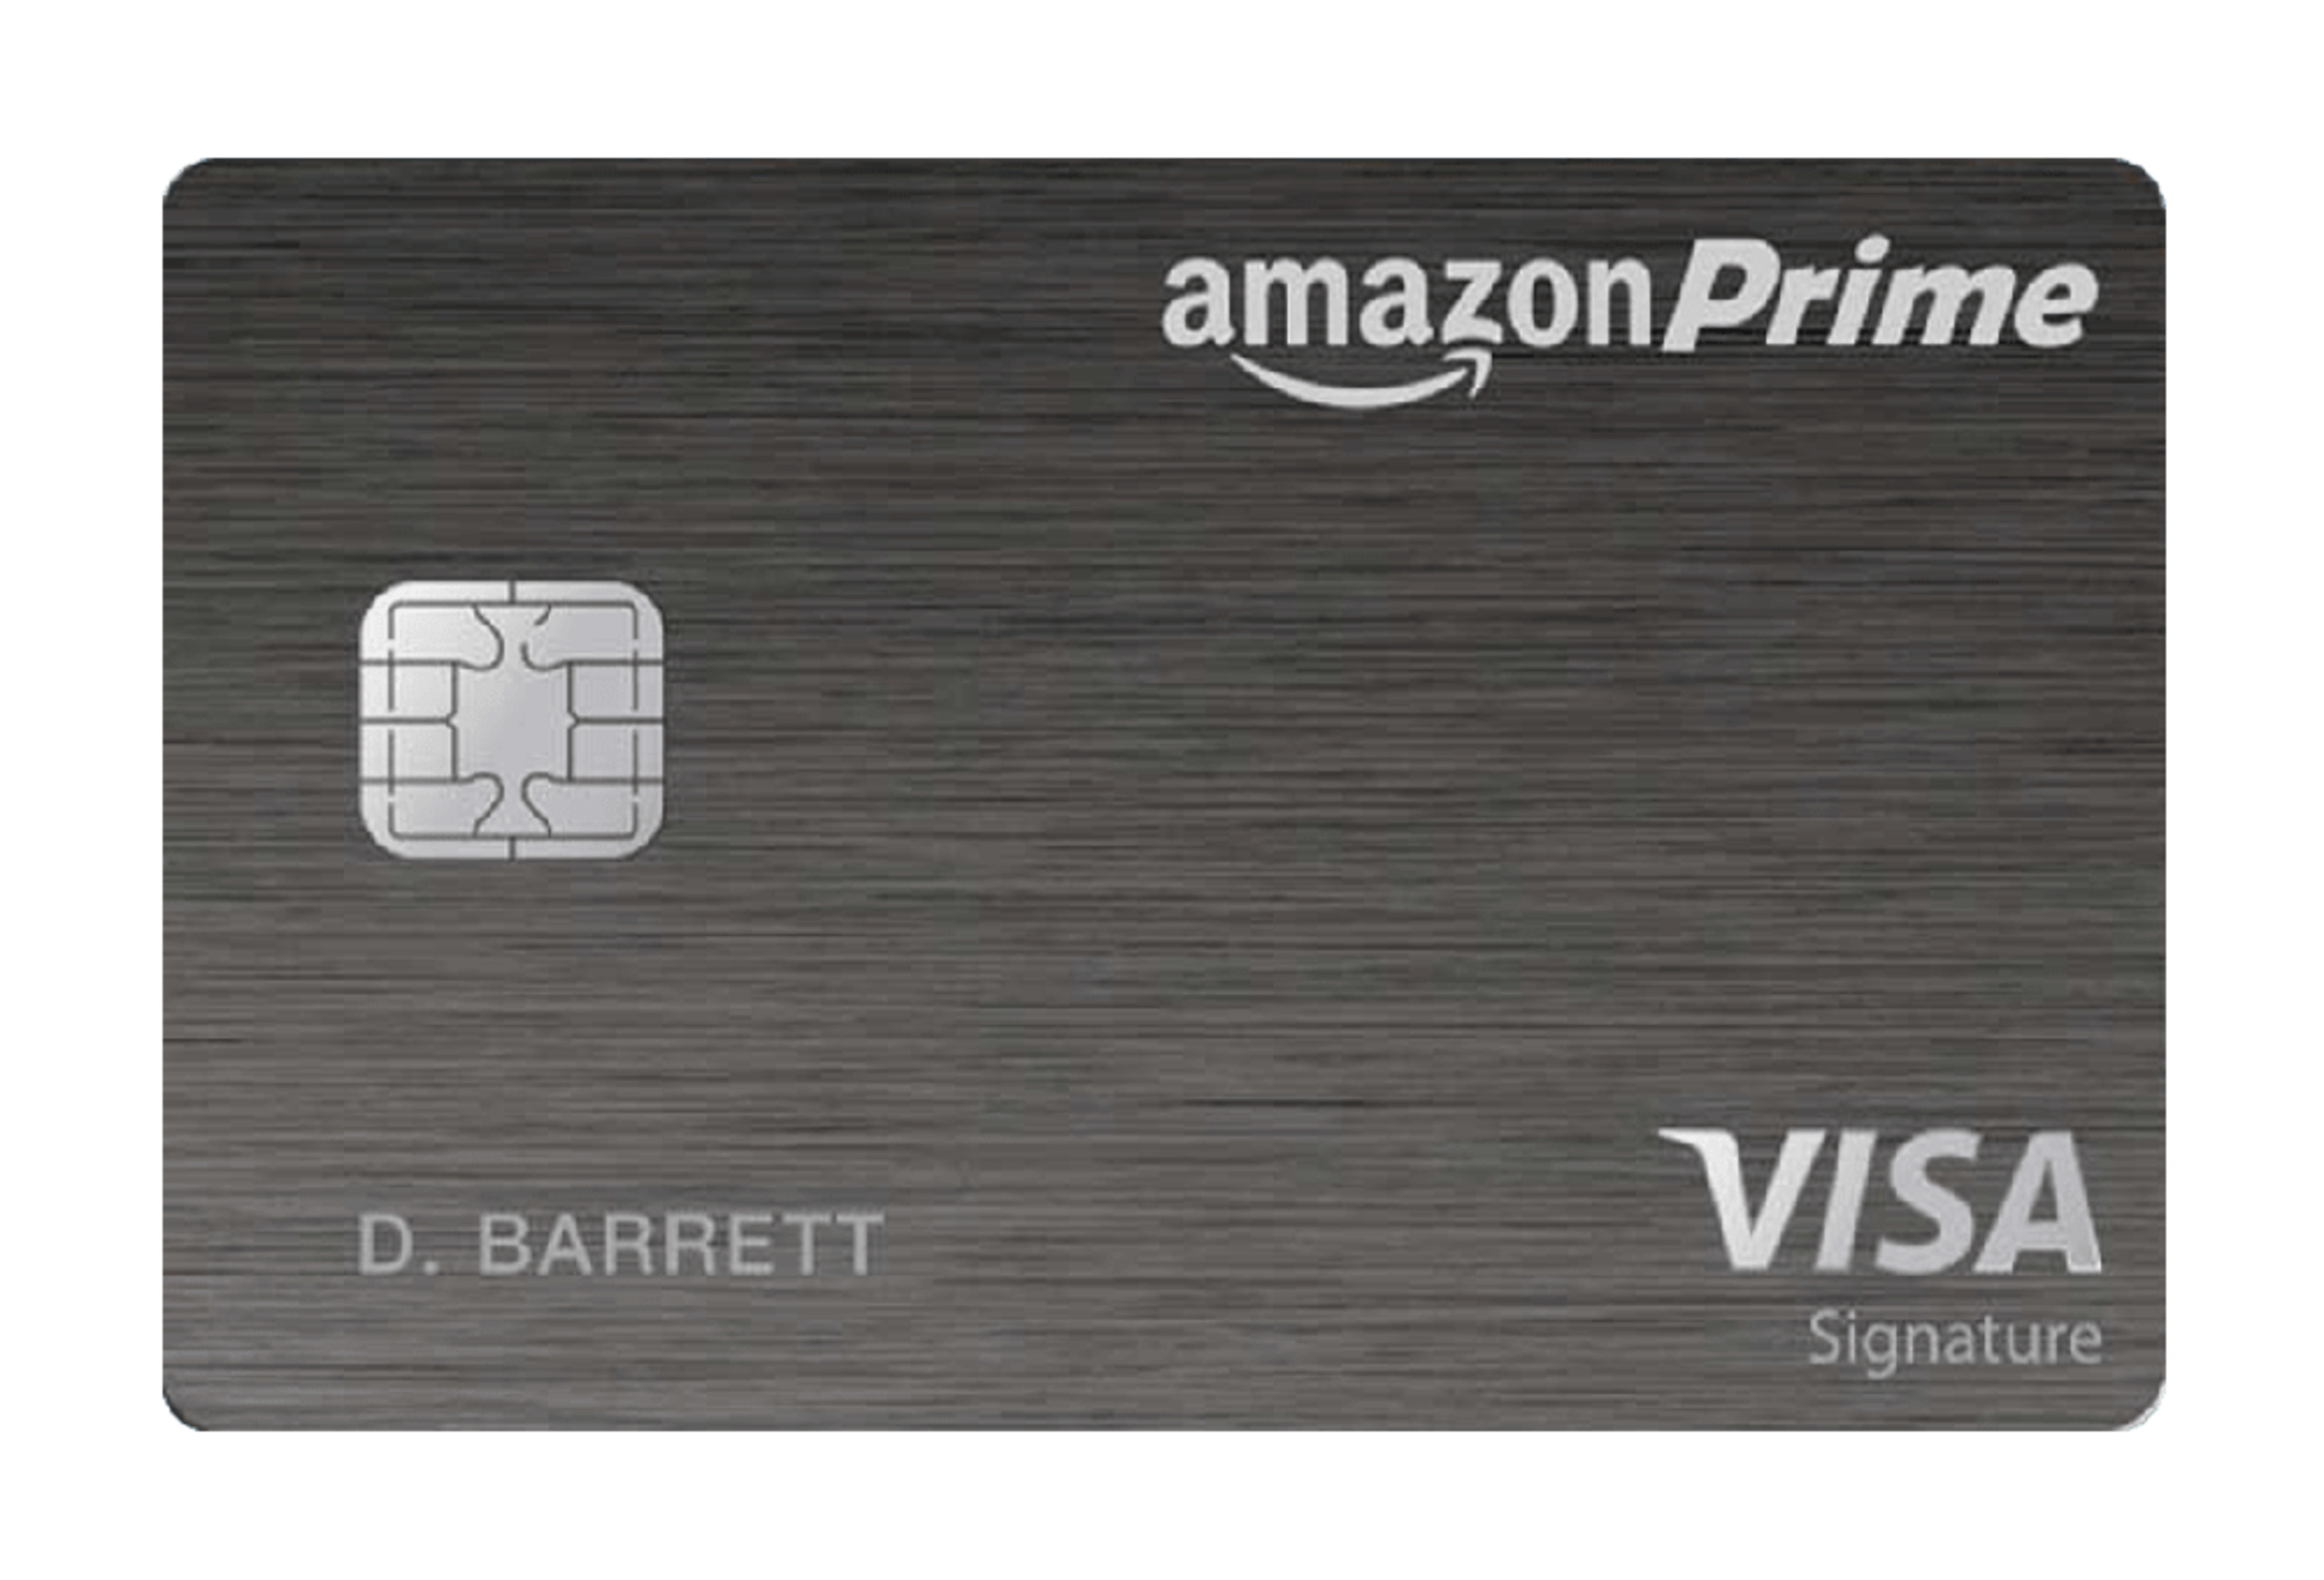 Amazon Prime Rewards Visa Signature Card Managed by Tally.